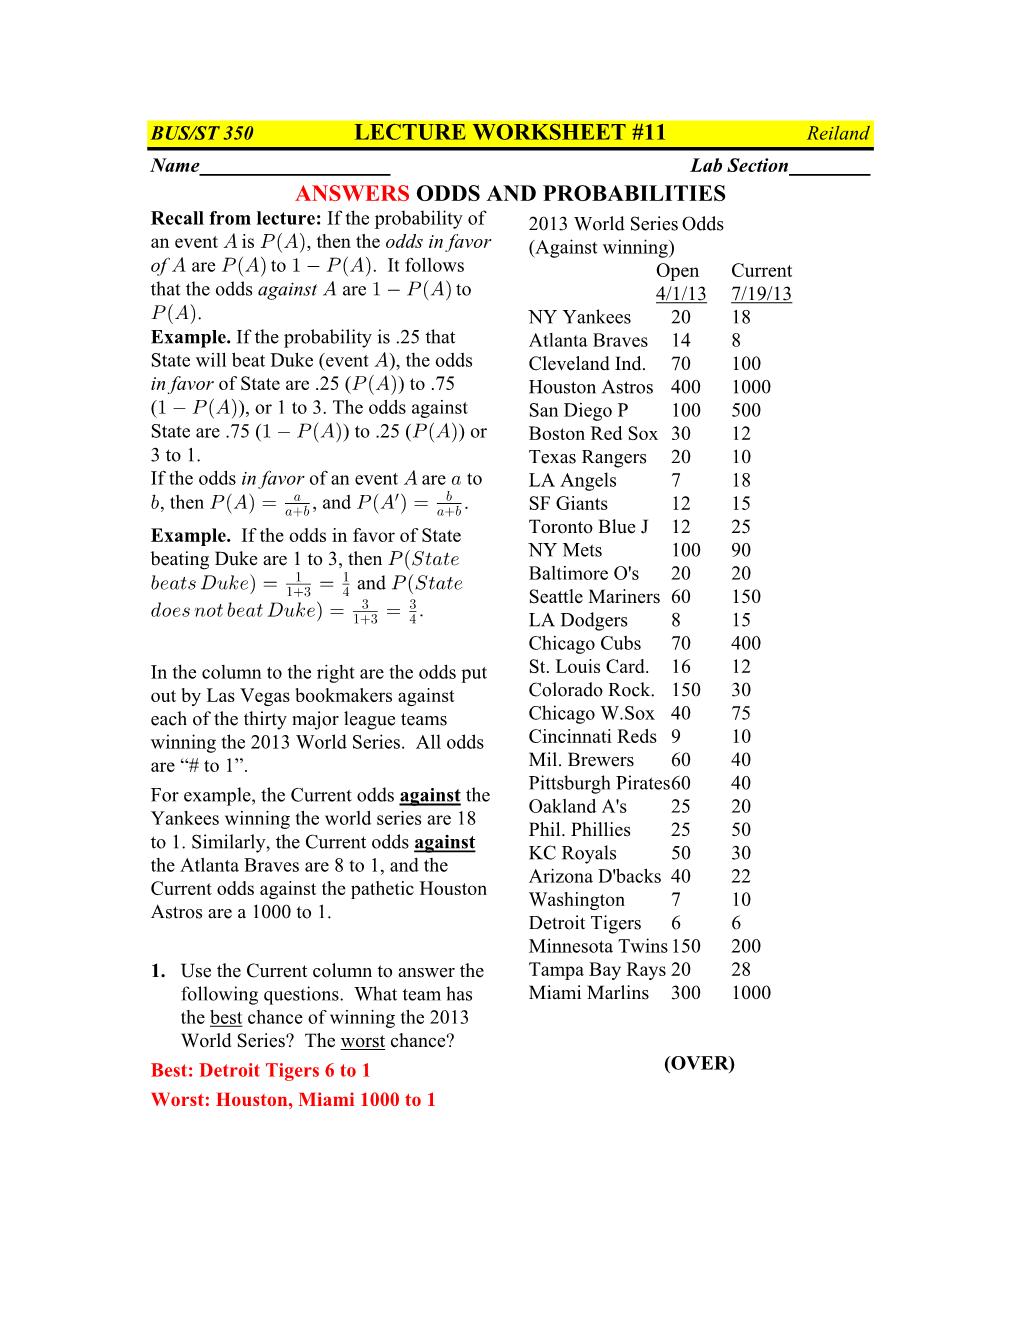 Worksheet 11 Odds and Probability (Baseball)